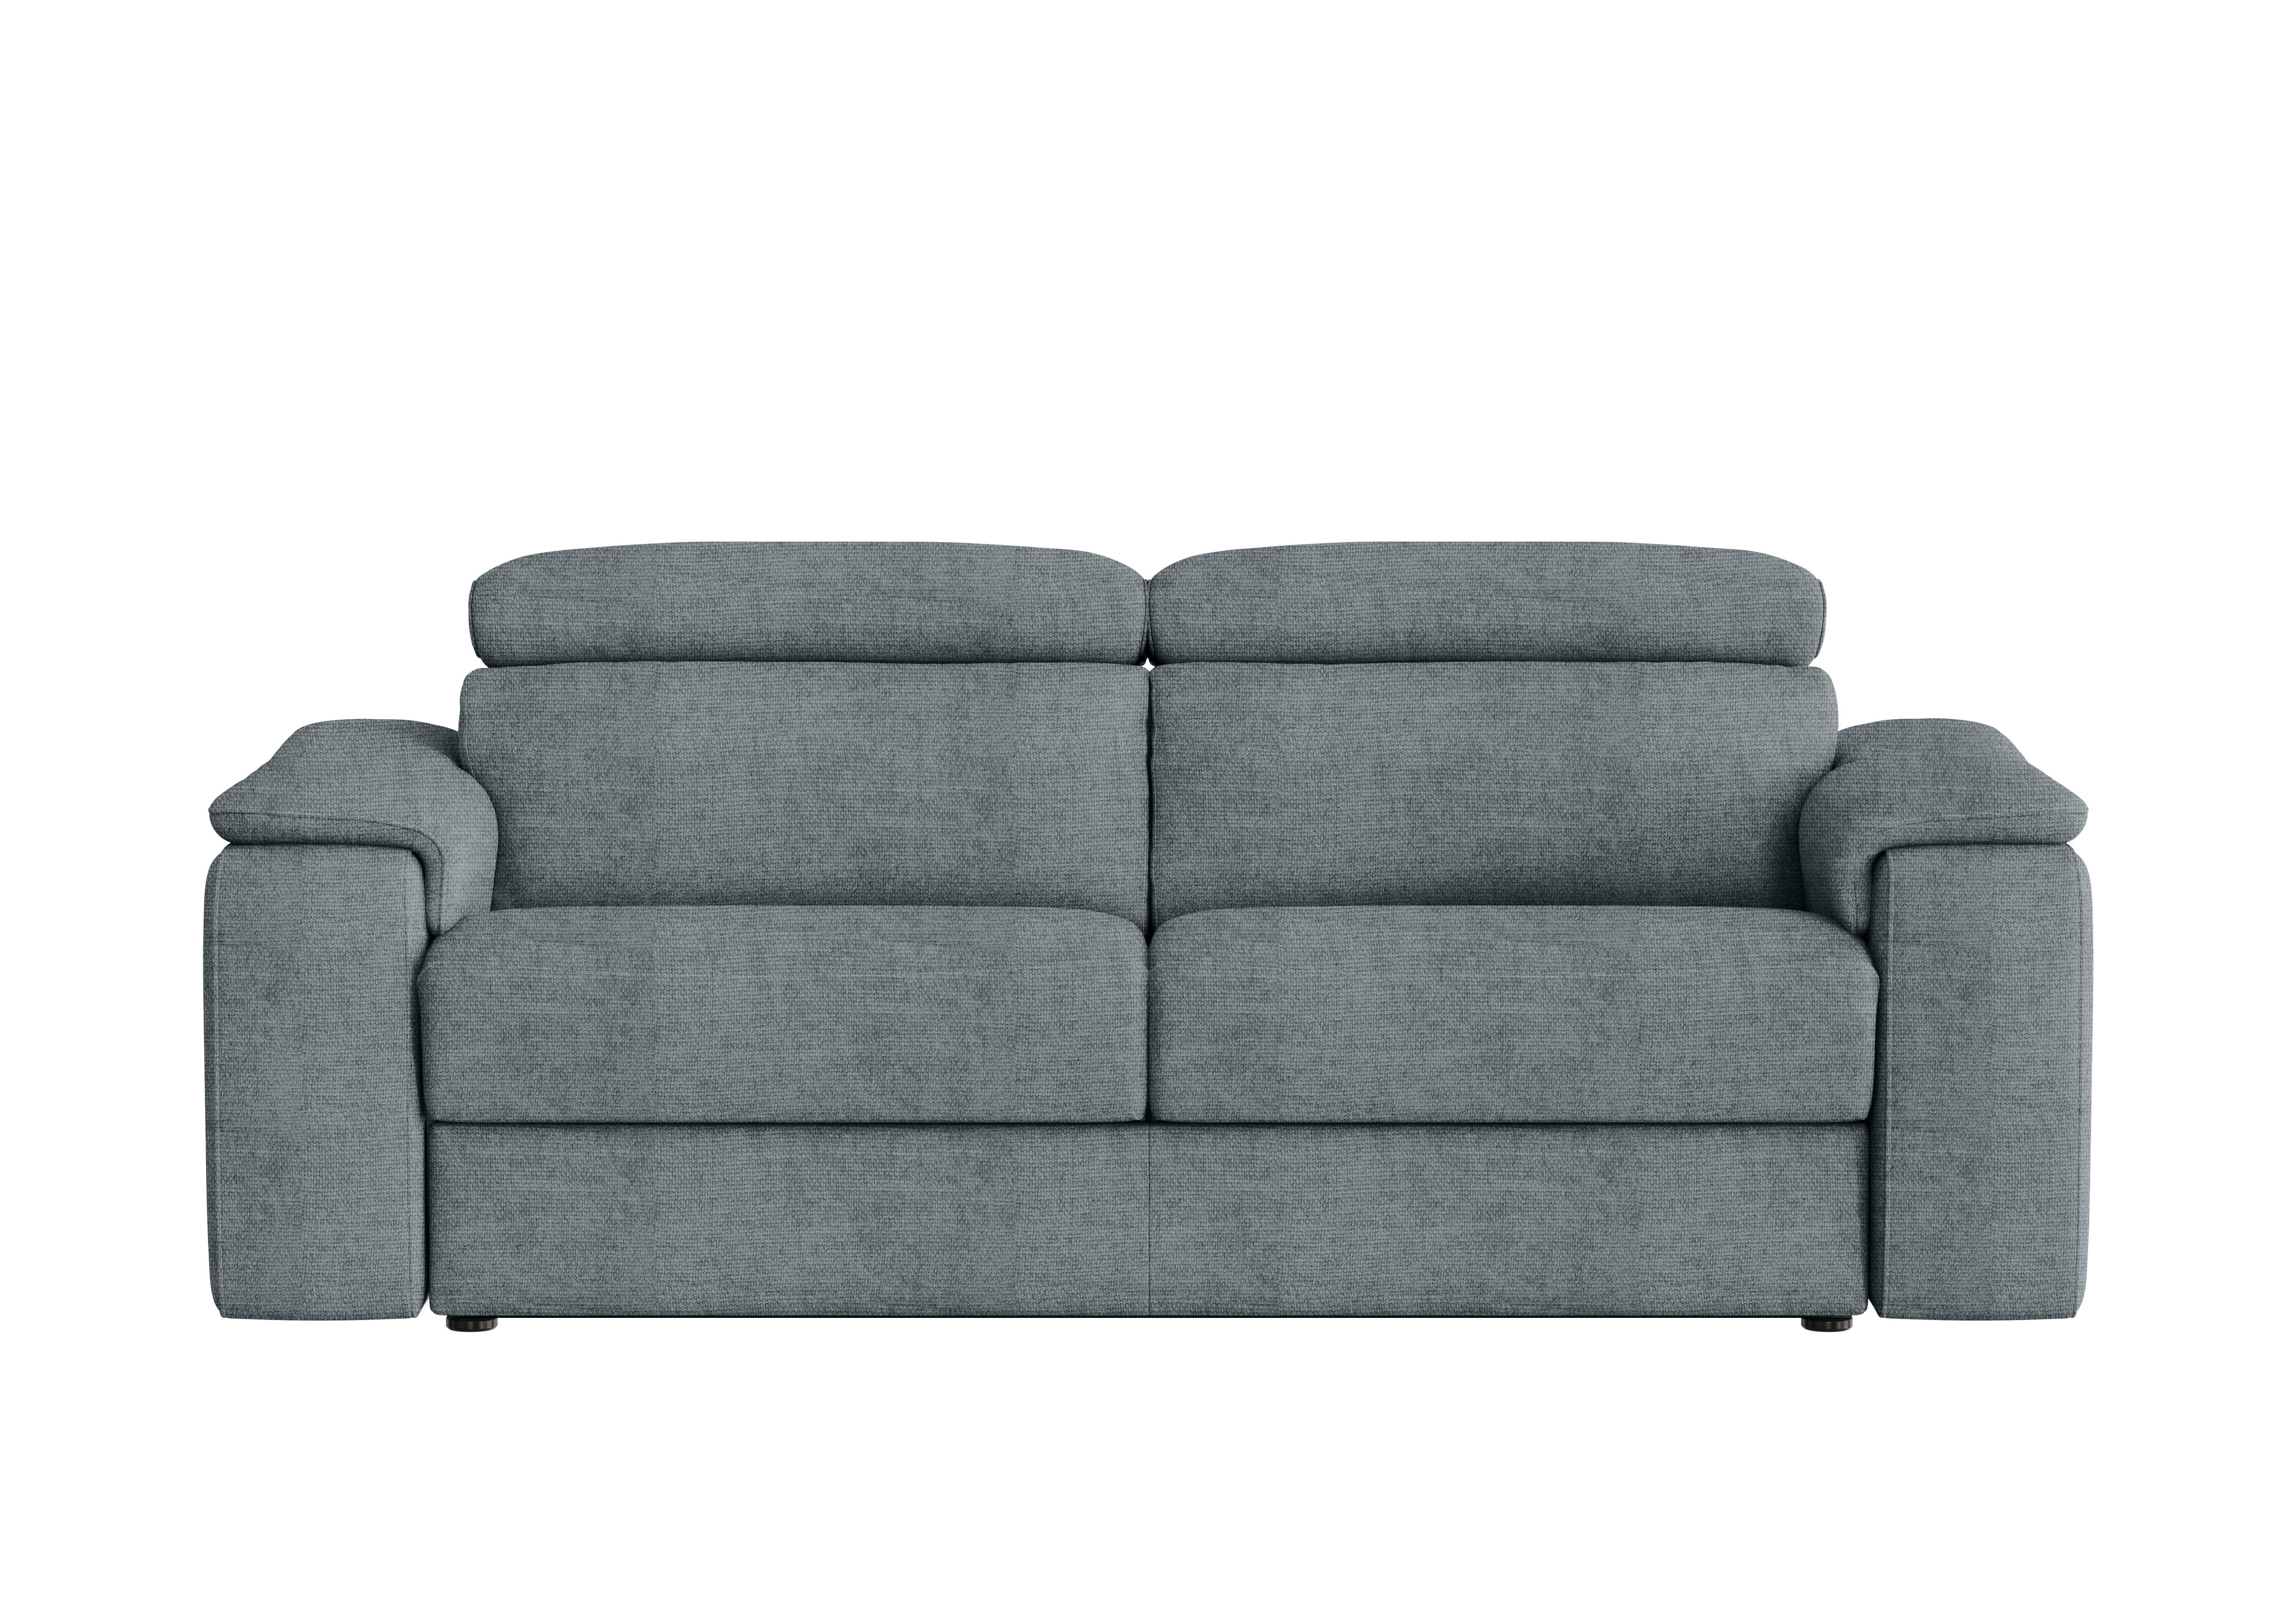 Davide 3 Seater Fabric Sofa in Baobab Grigio 546 on Furniture Village